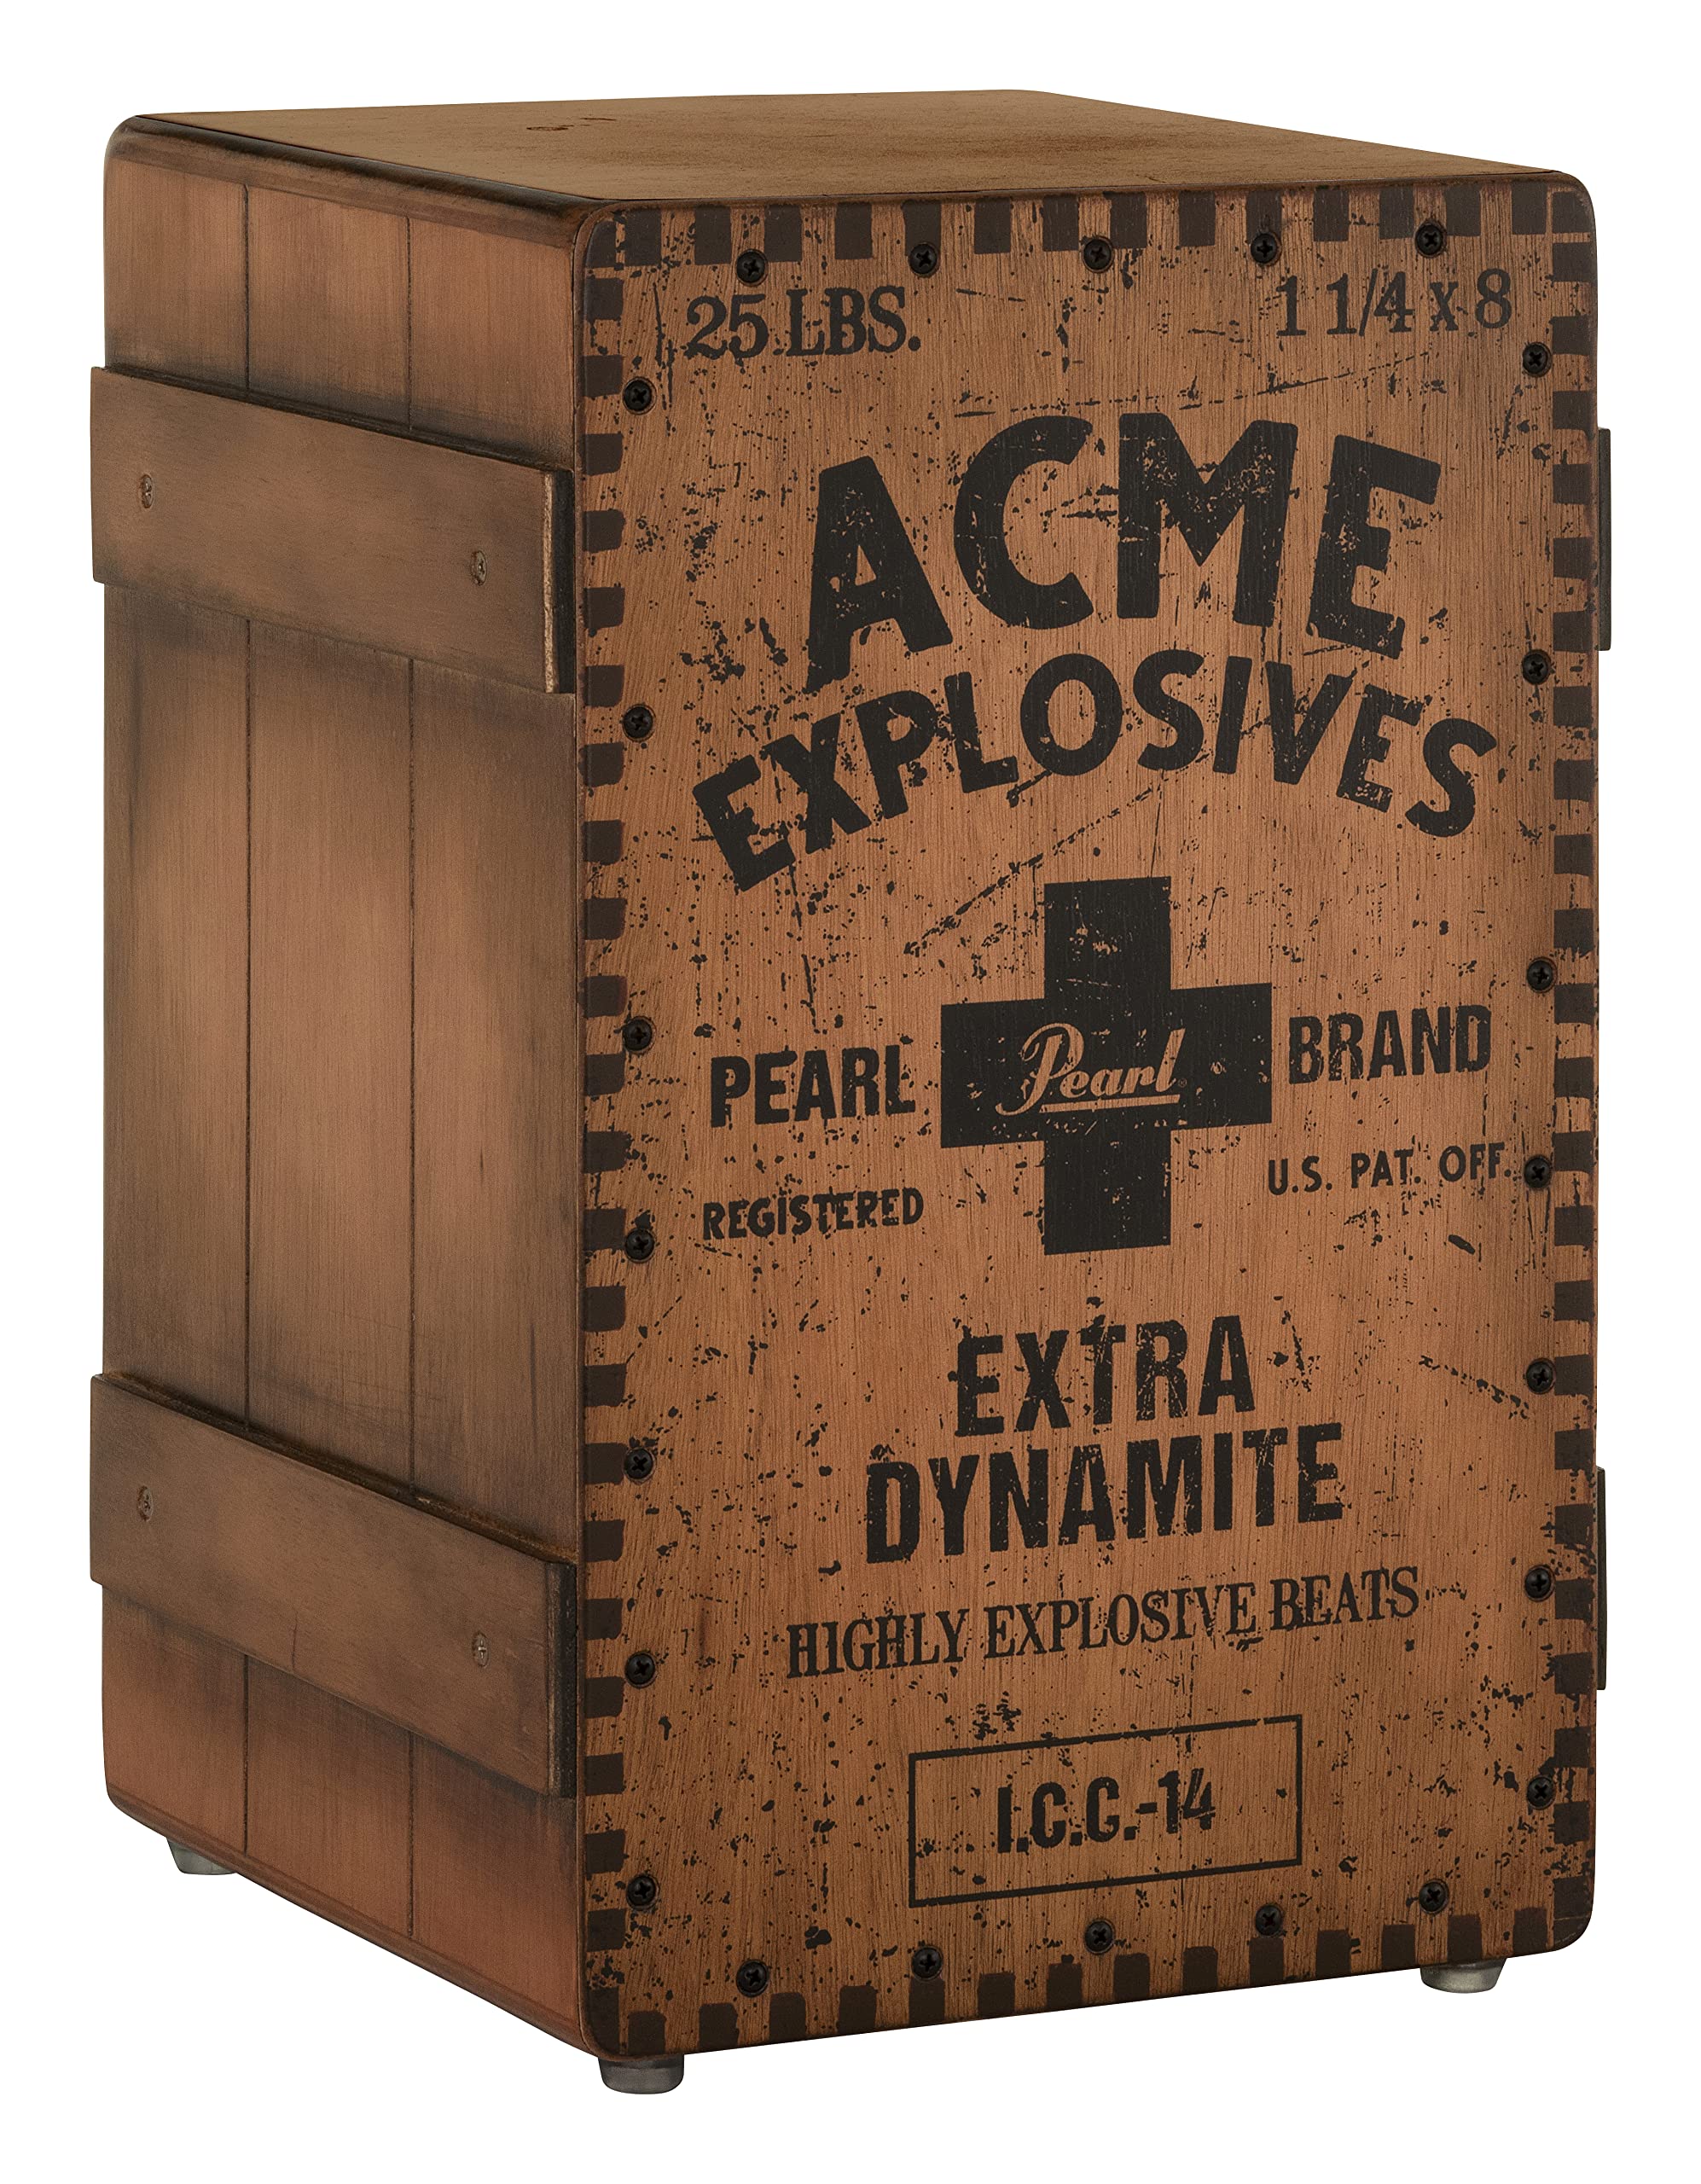 Pearl Кахон Primero Crate Style с передней частью Acme...